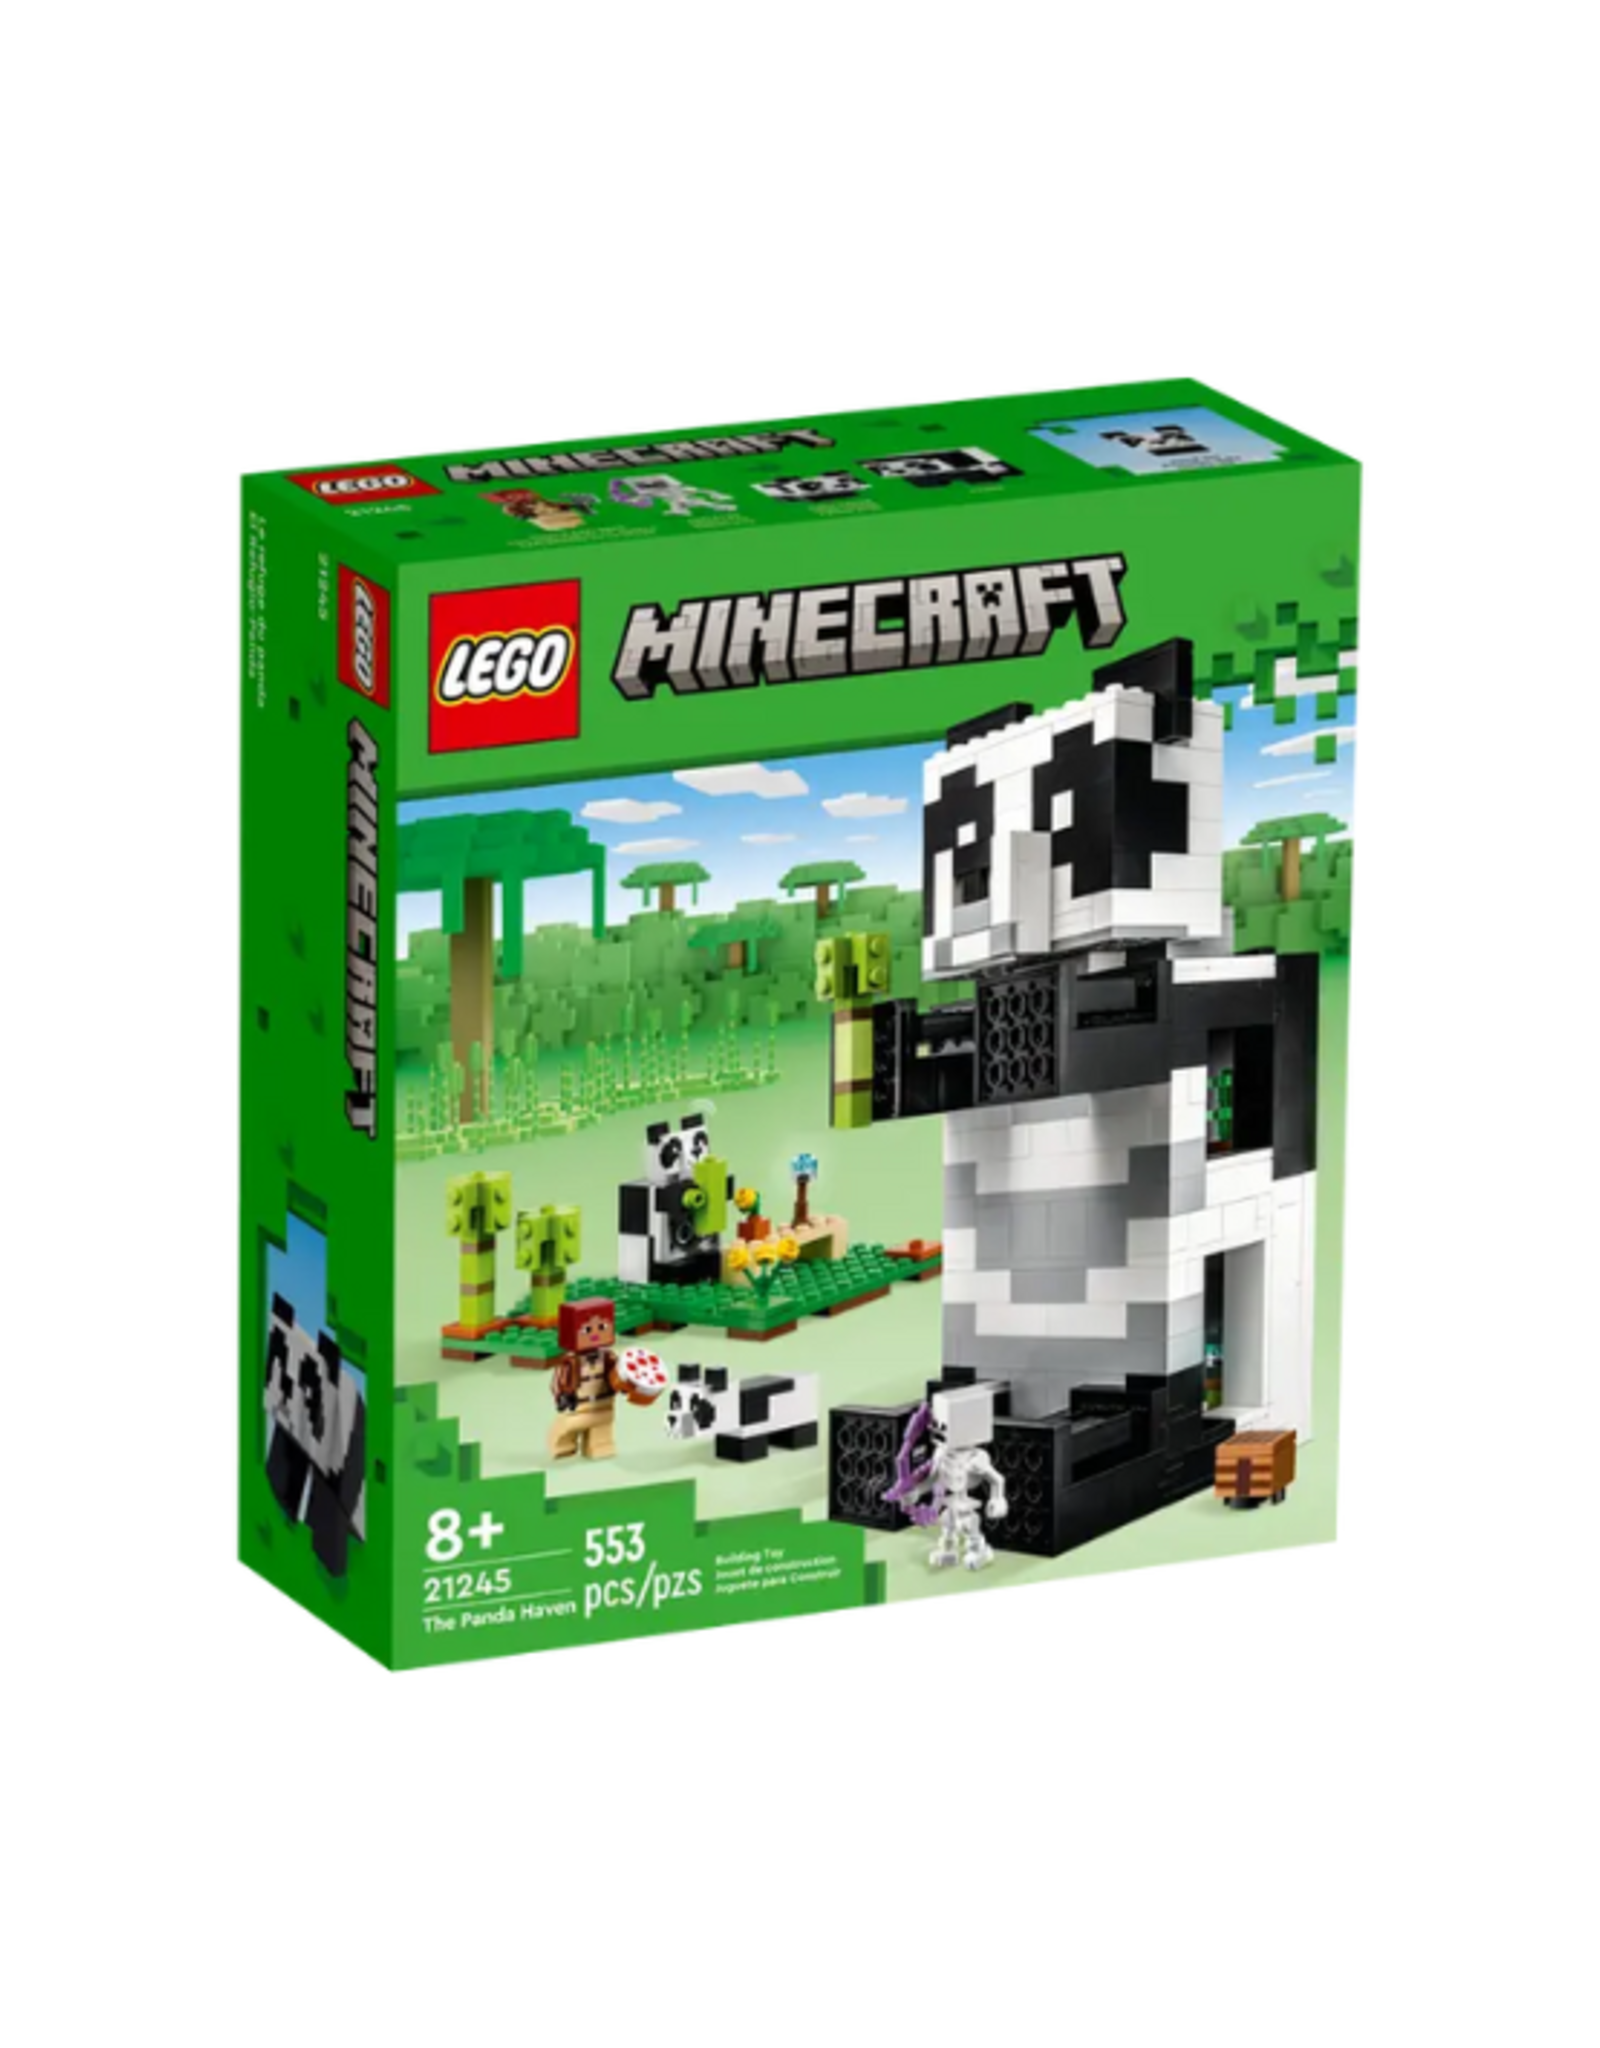 Lego Lego - Minecraft - 21245 - The Panda Haven